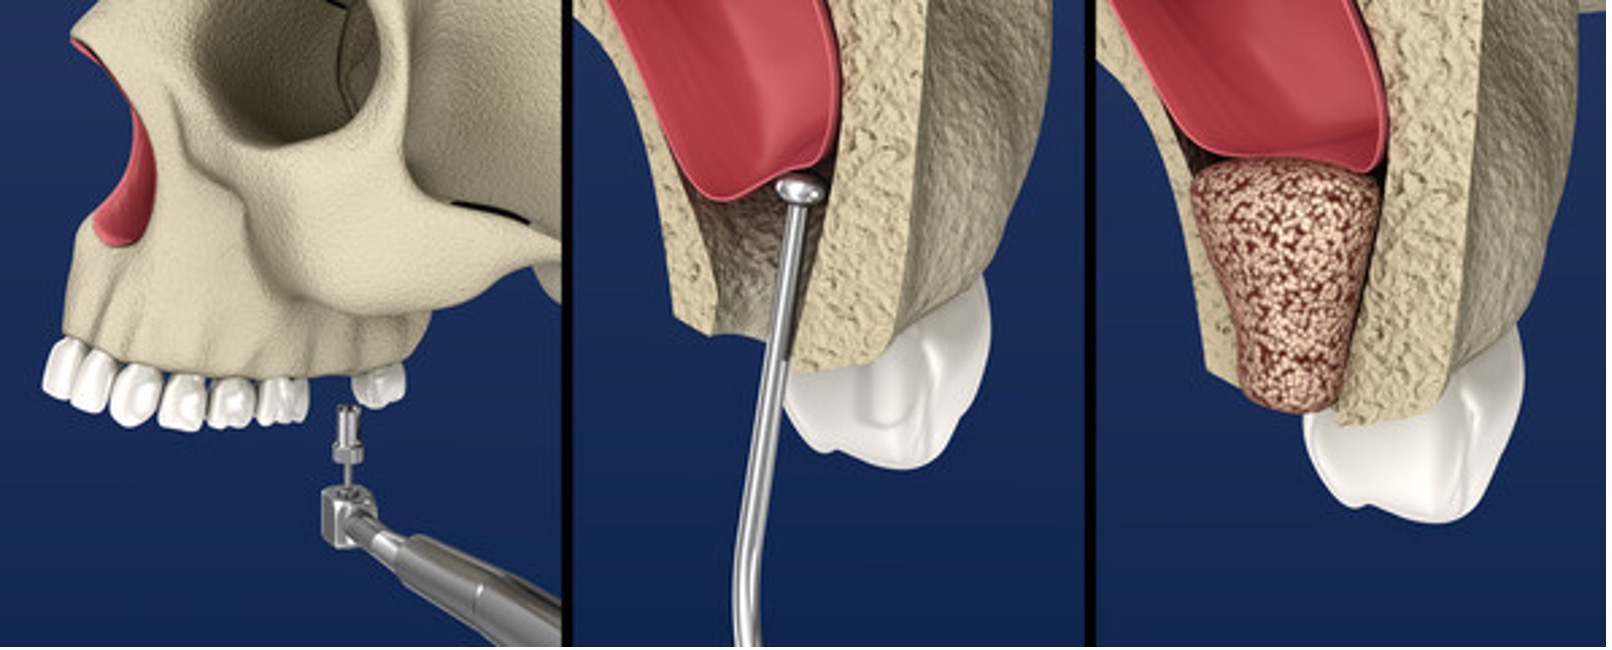 Sinus Lift And Dental Implant North Texas Dental Surgery